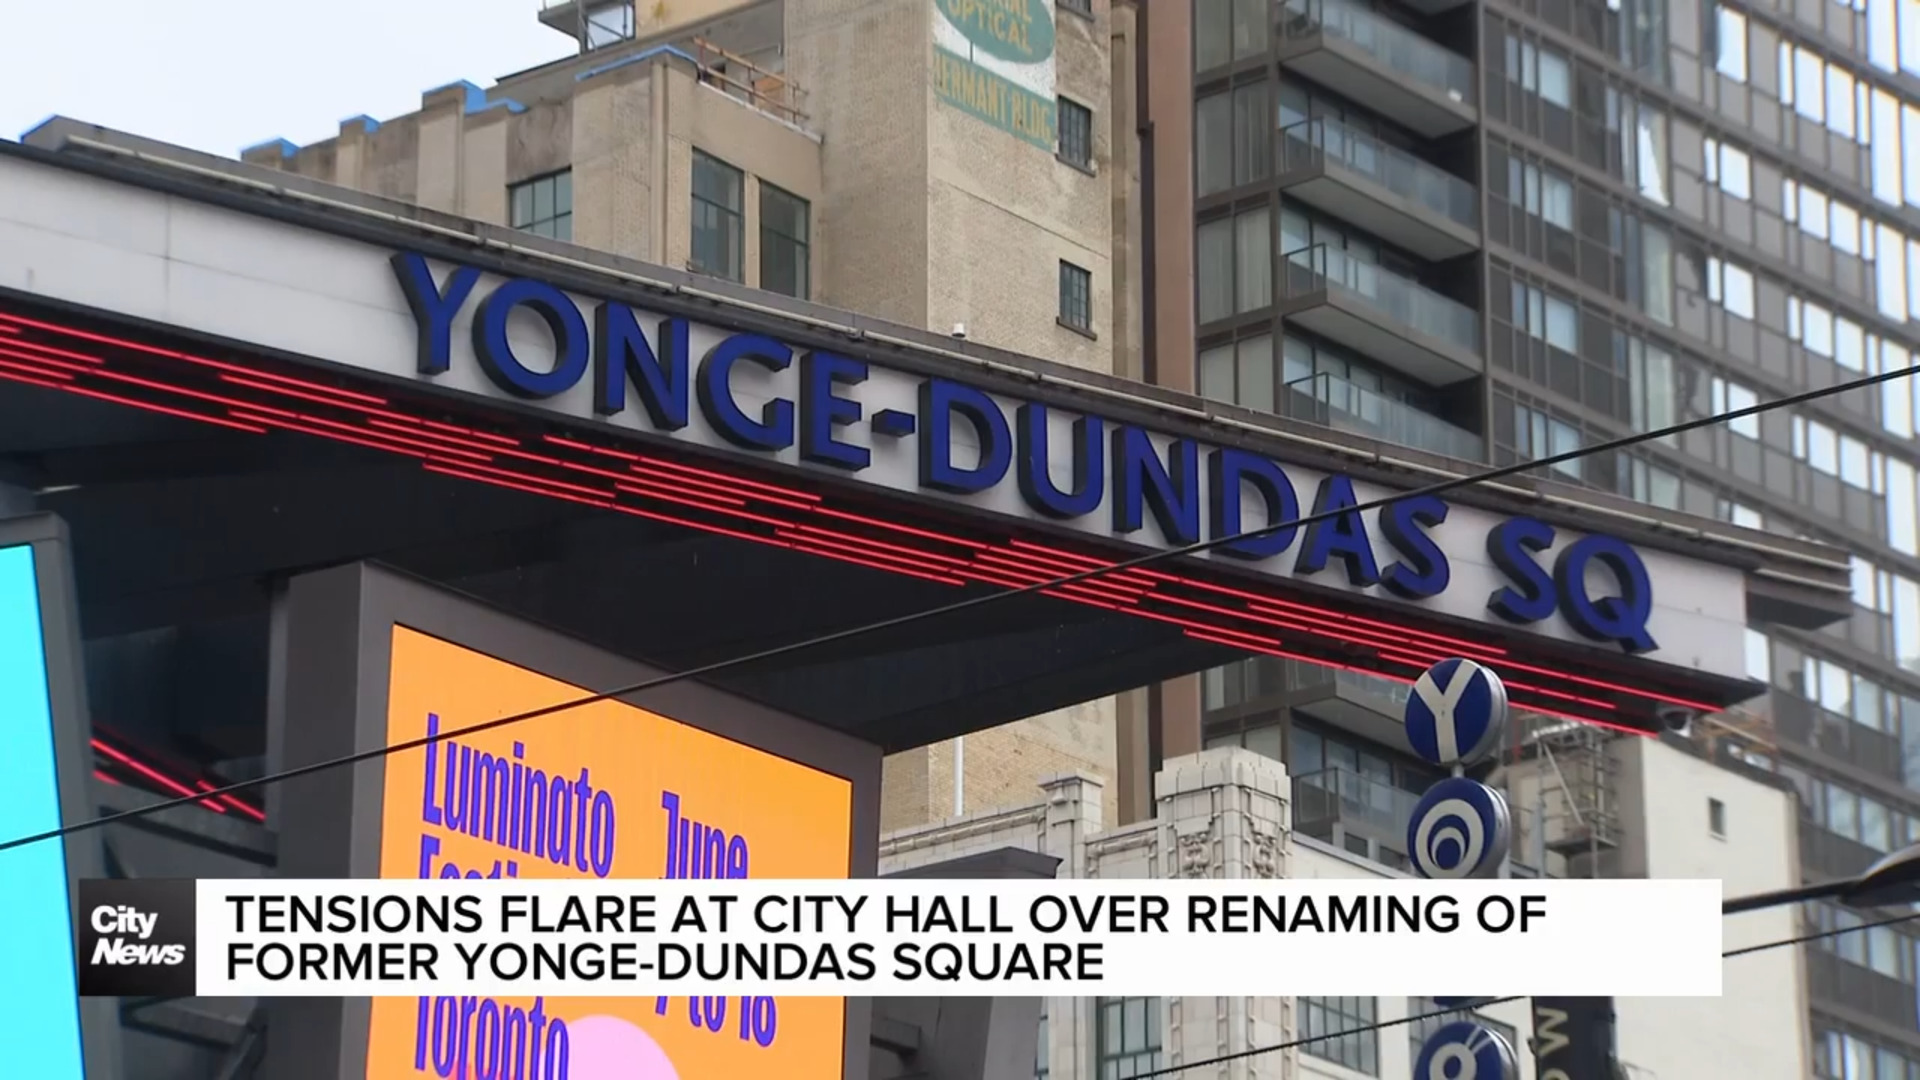 Tensions at City Hall over Dundas Square renaming